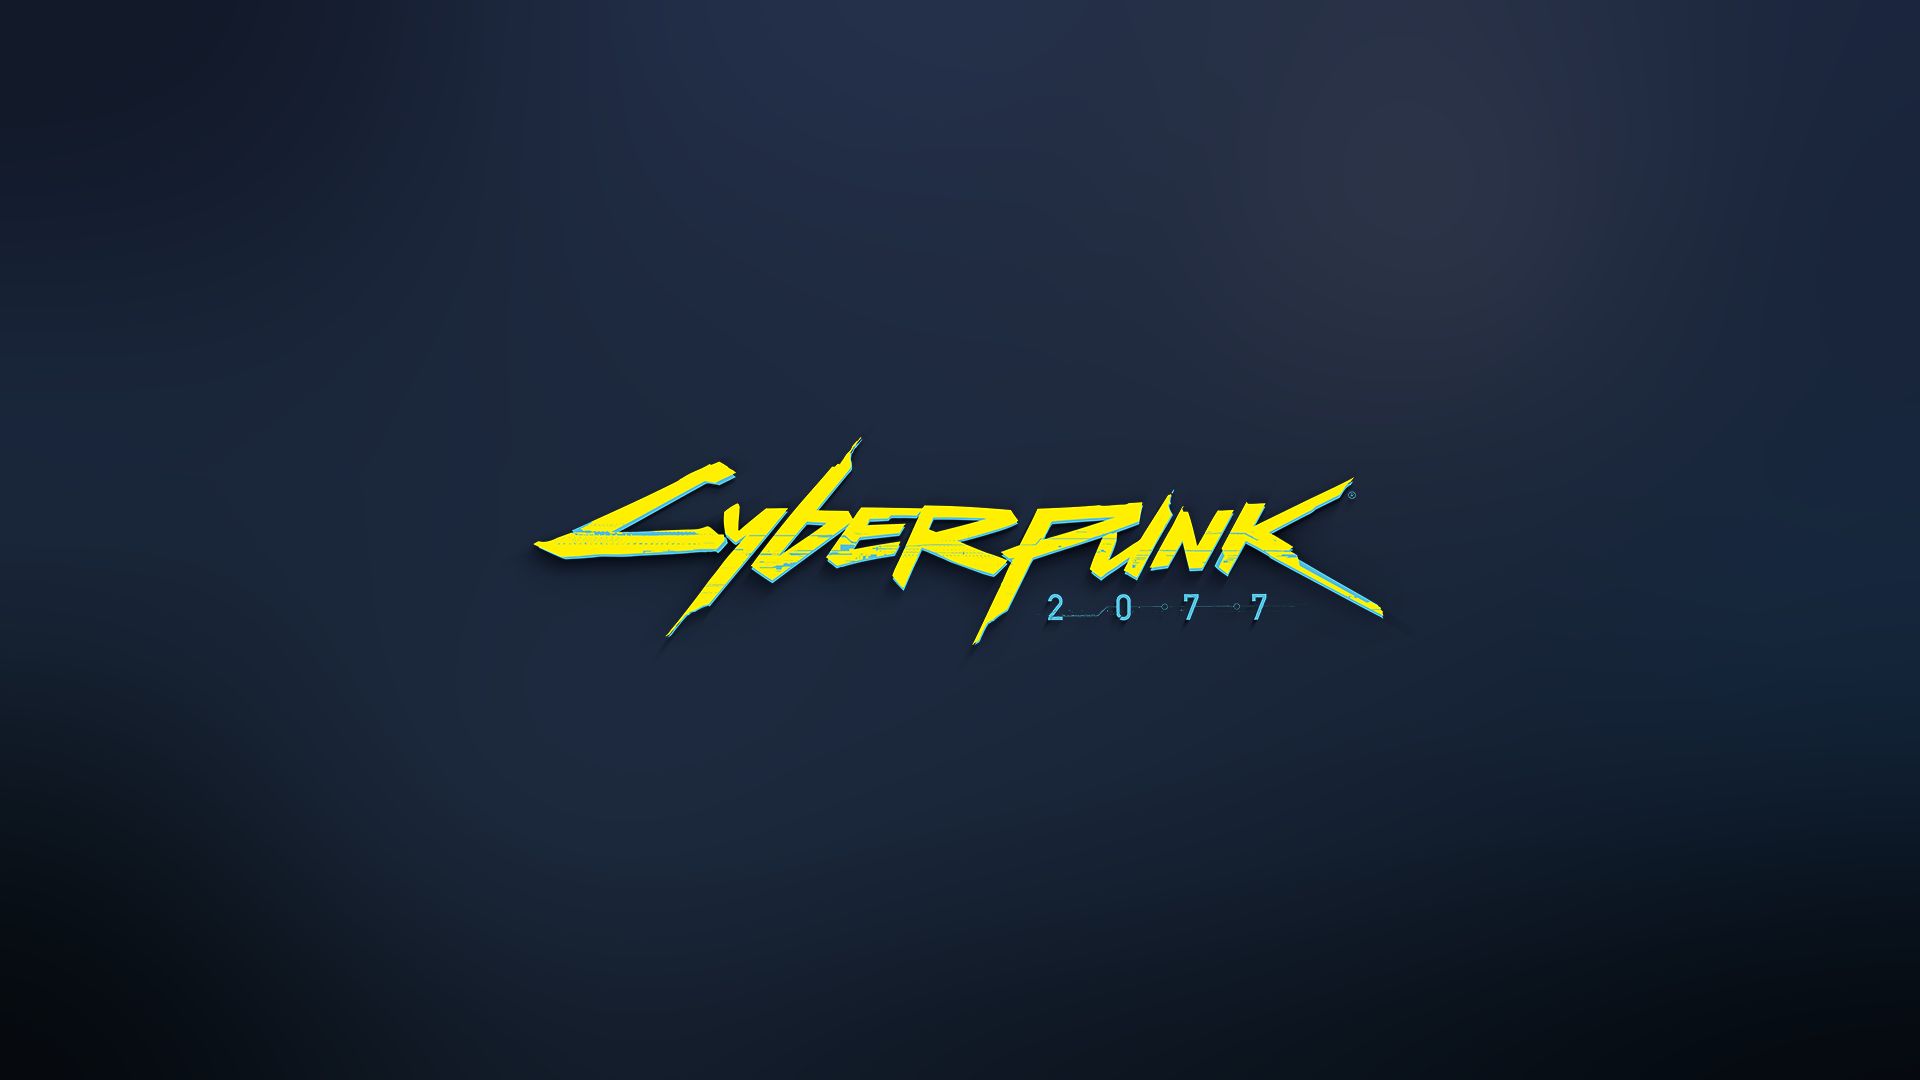 Cyberpunk logo wallpaper фото 16